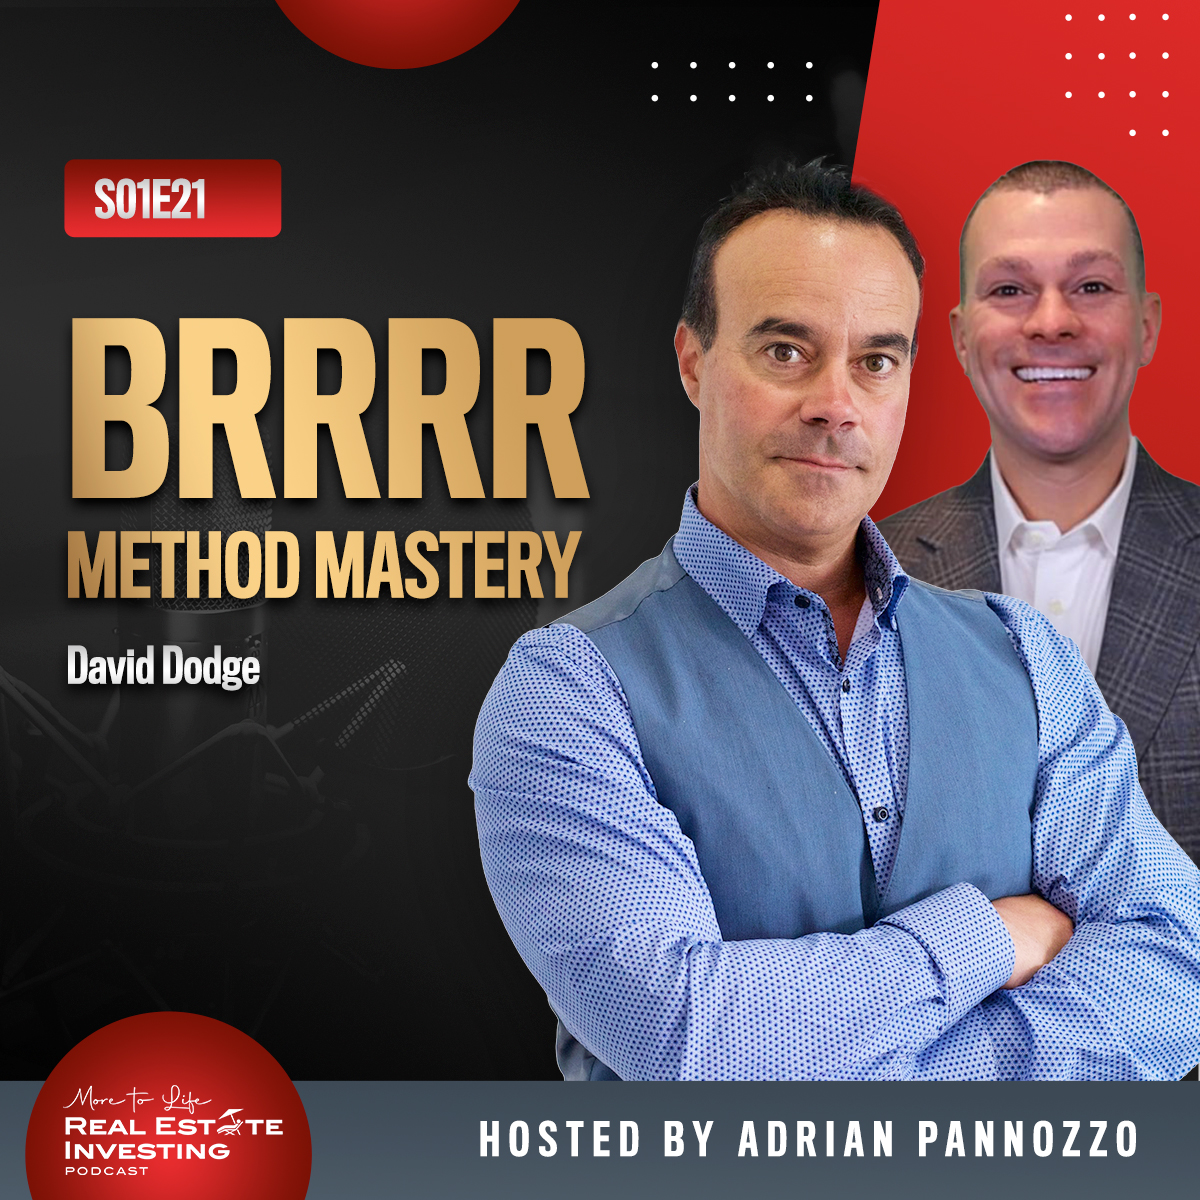 BRRRR Method Mastery with David Dodge